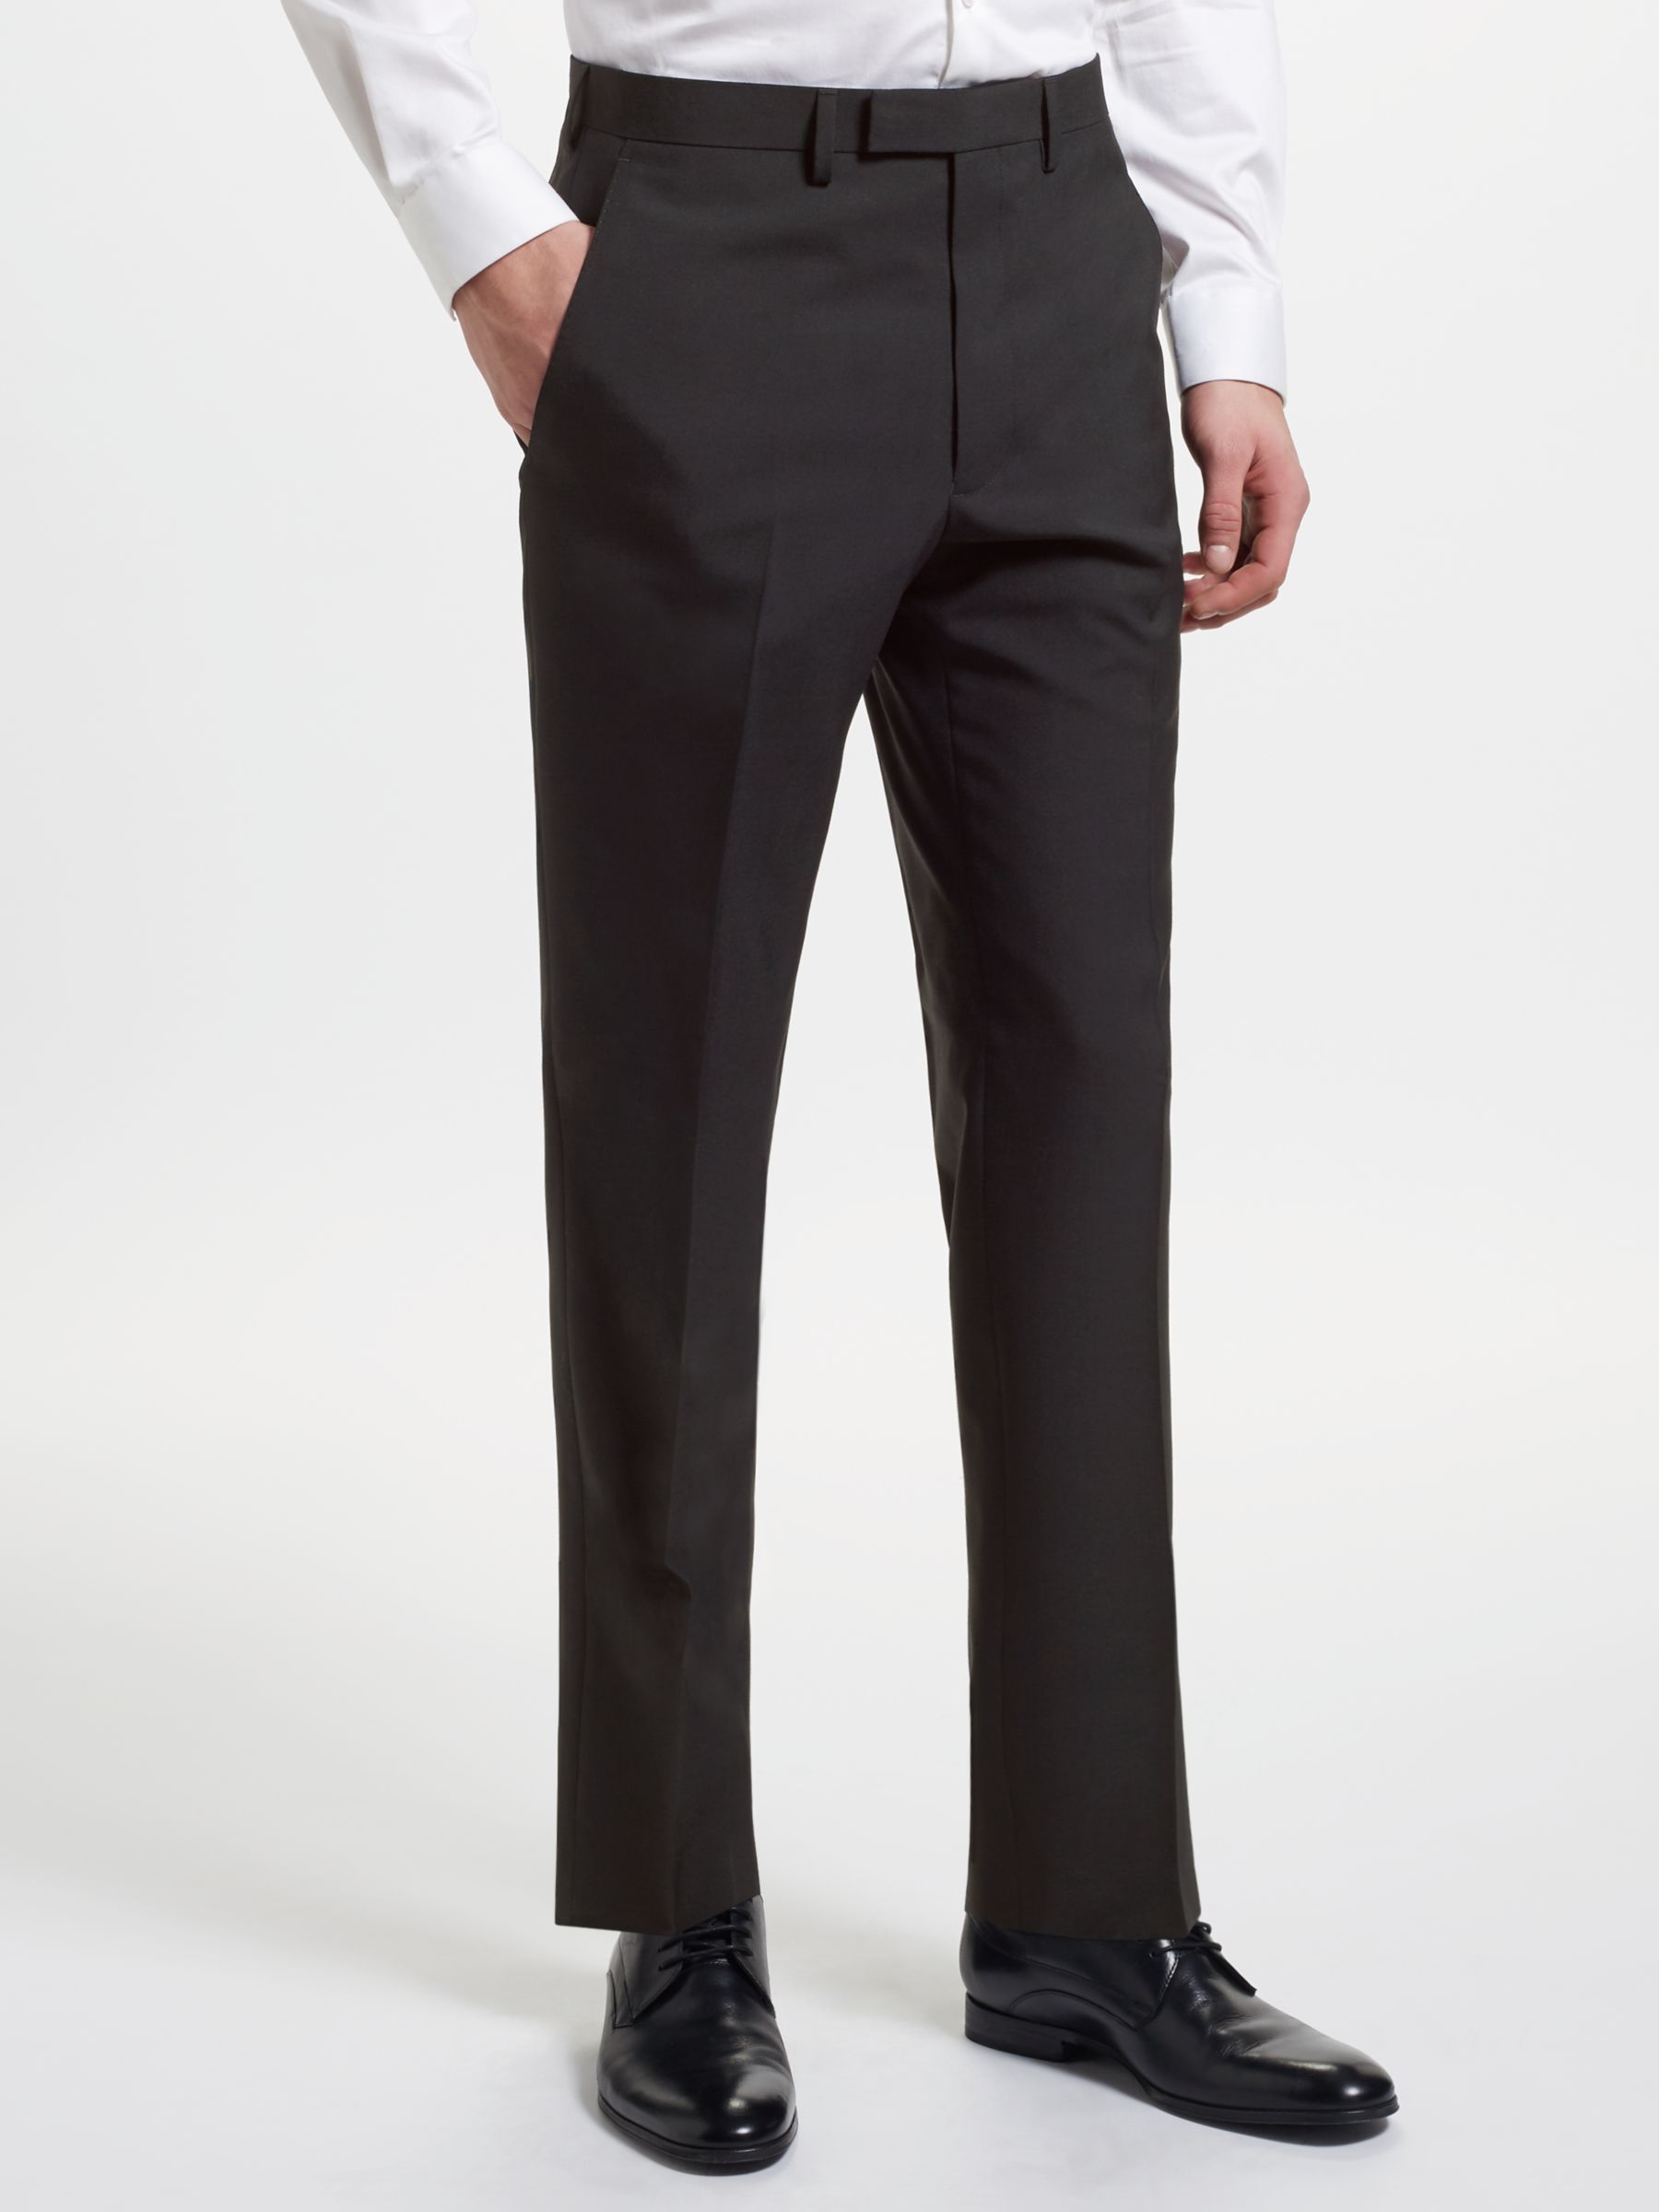 Kin Slim Fit Suit Trousers, Black at John Lewis & Partners